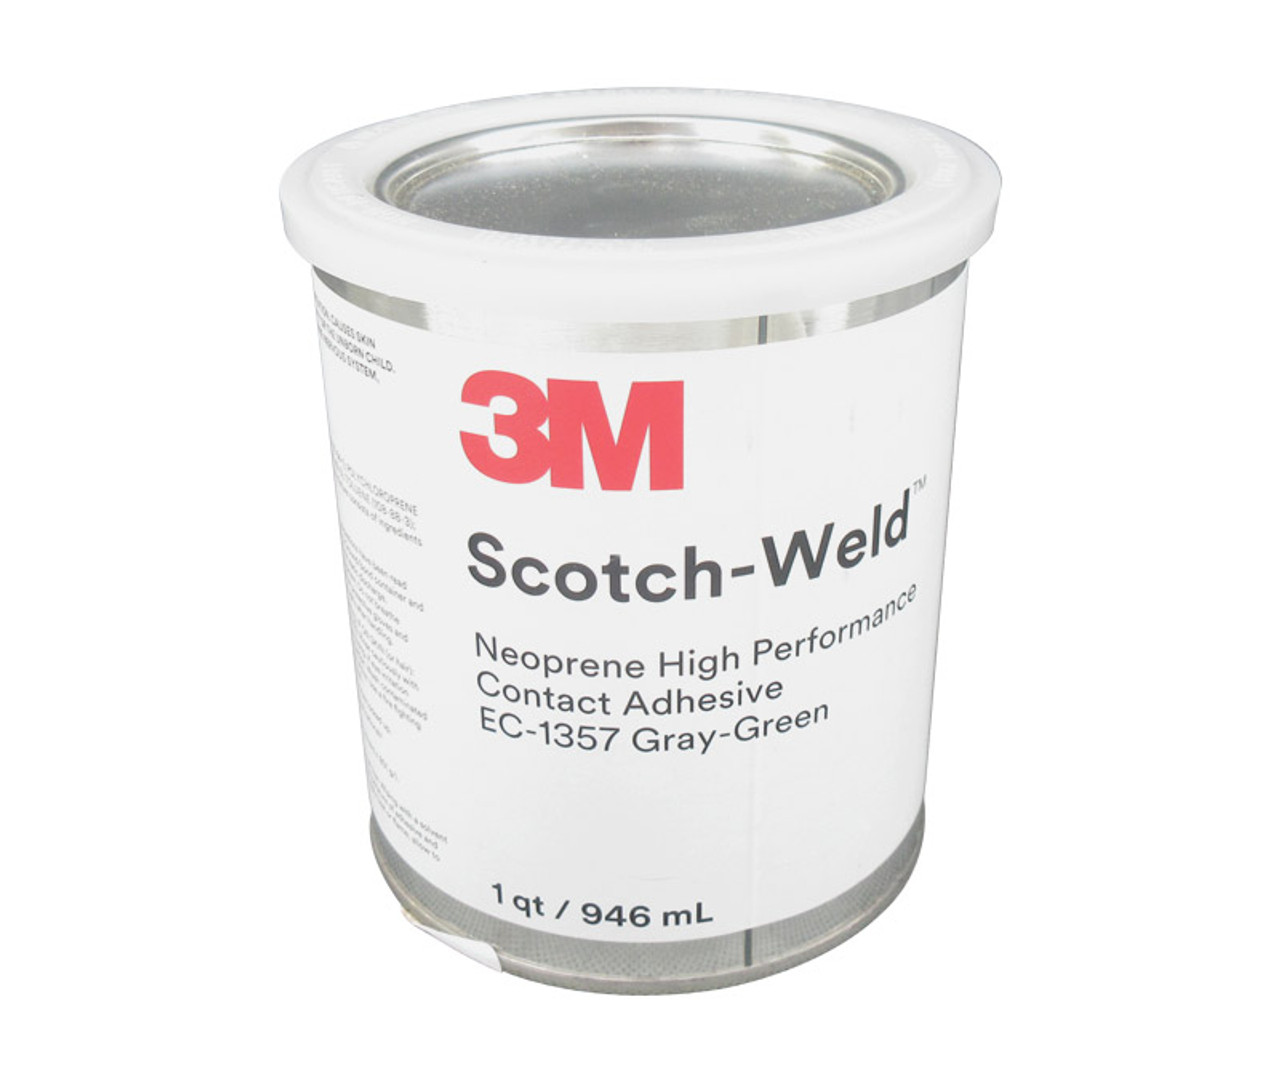 3M Neoprene High Performance Contact Adhesive 1357 Gray-Green 1 Quart